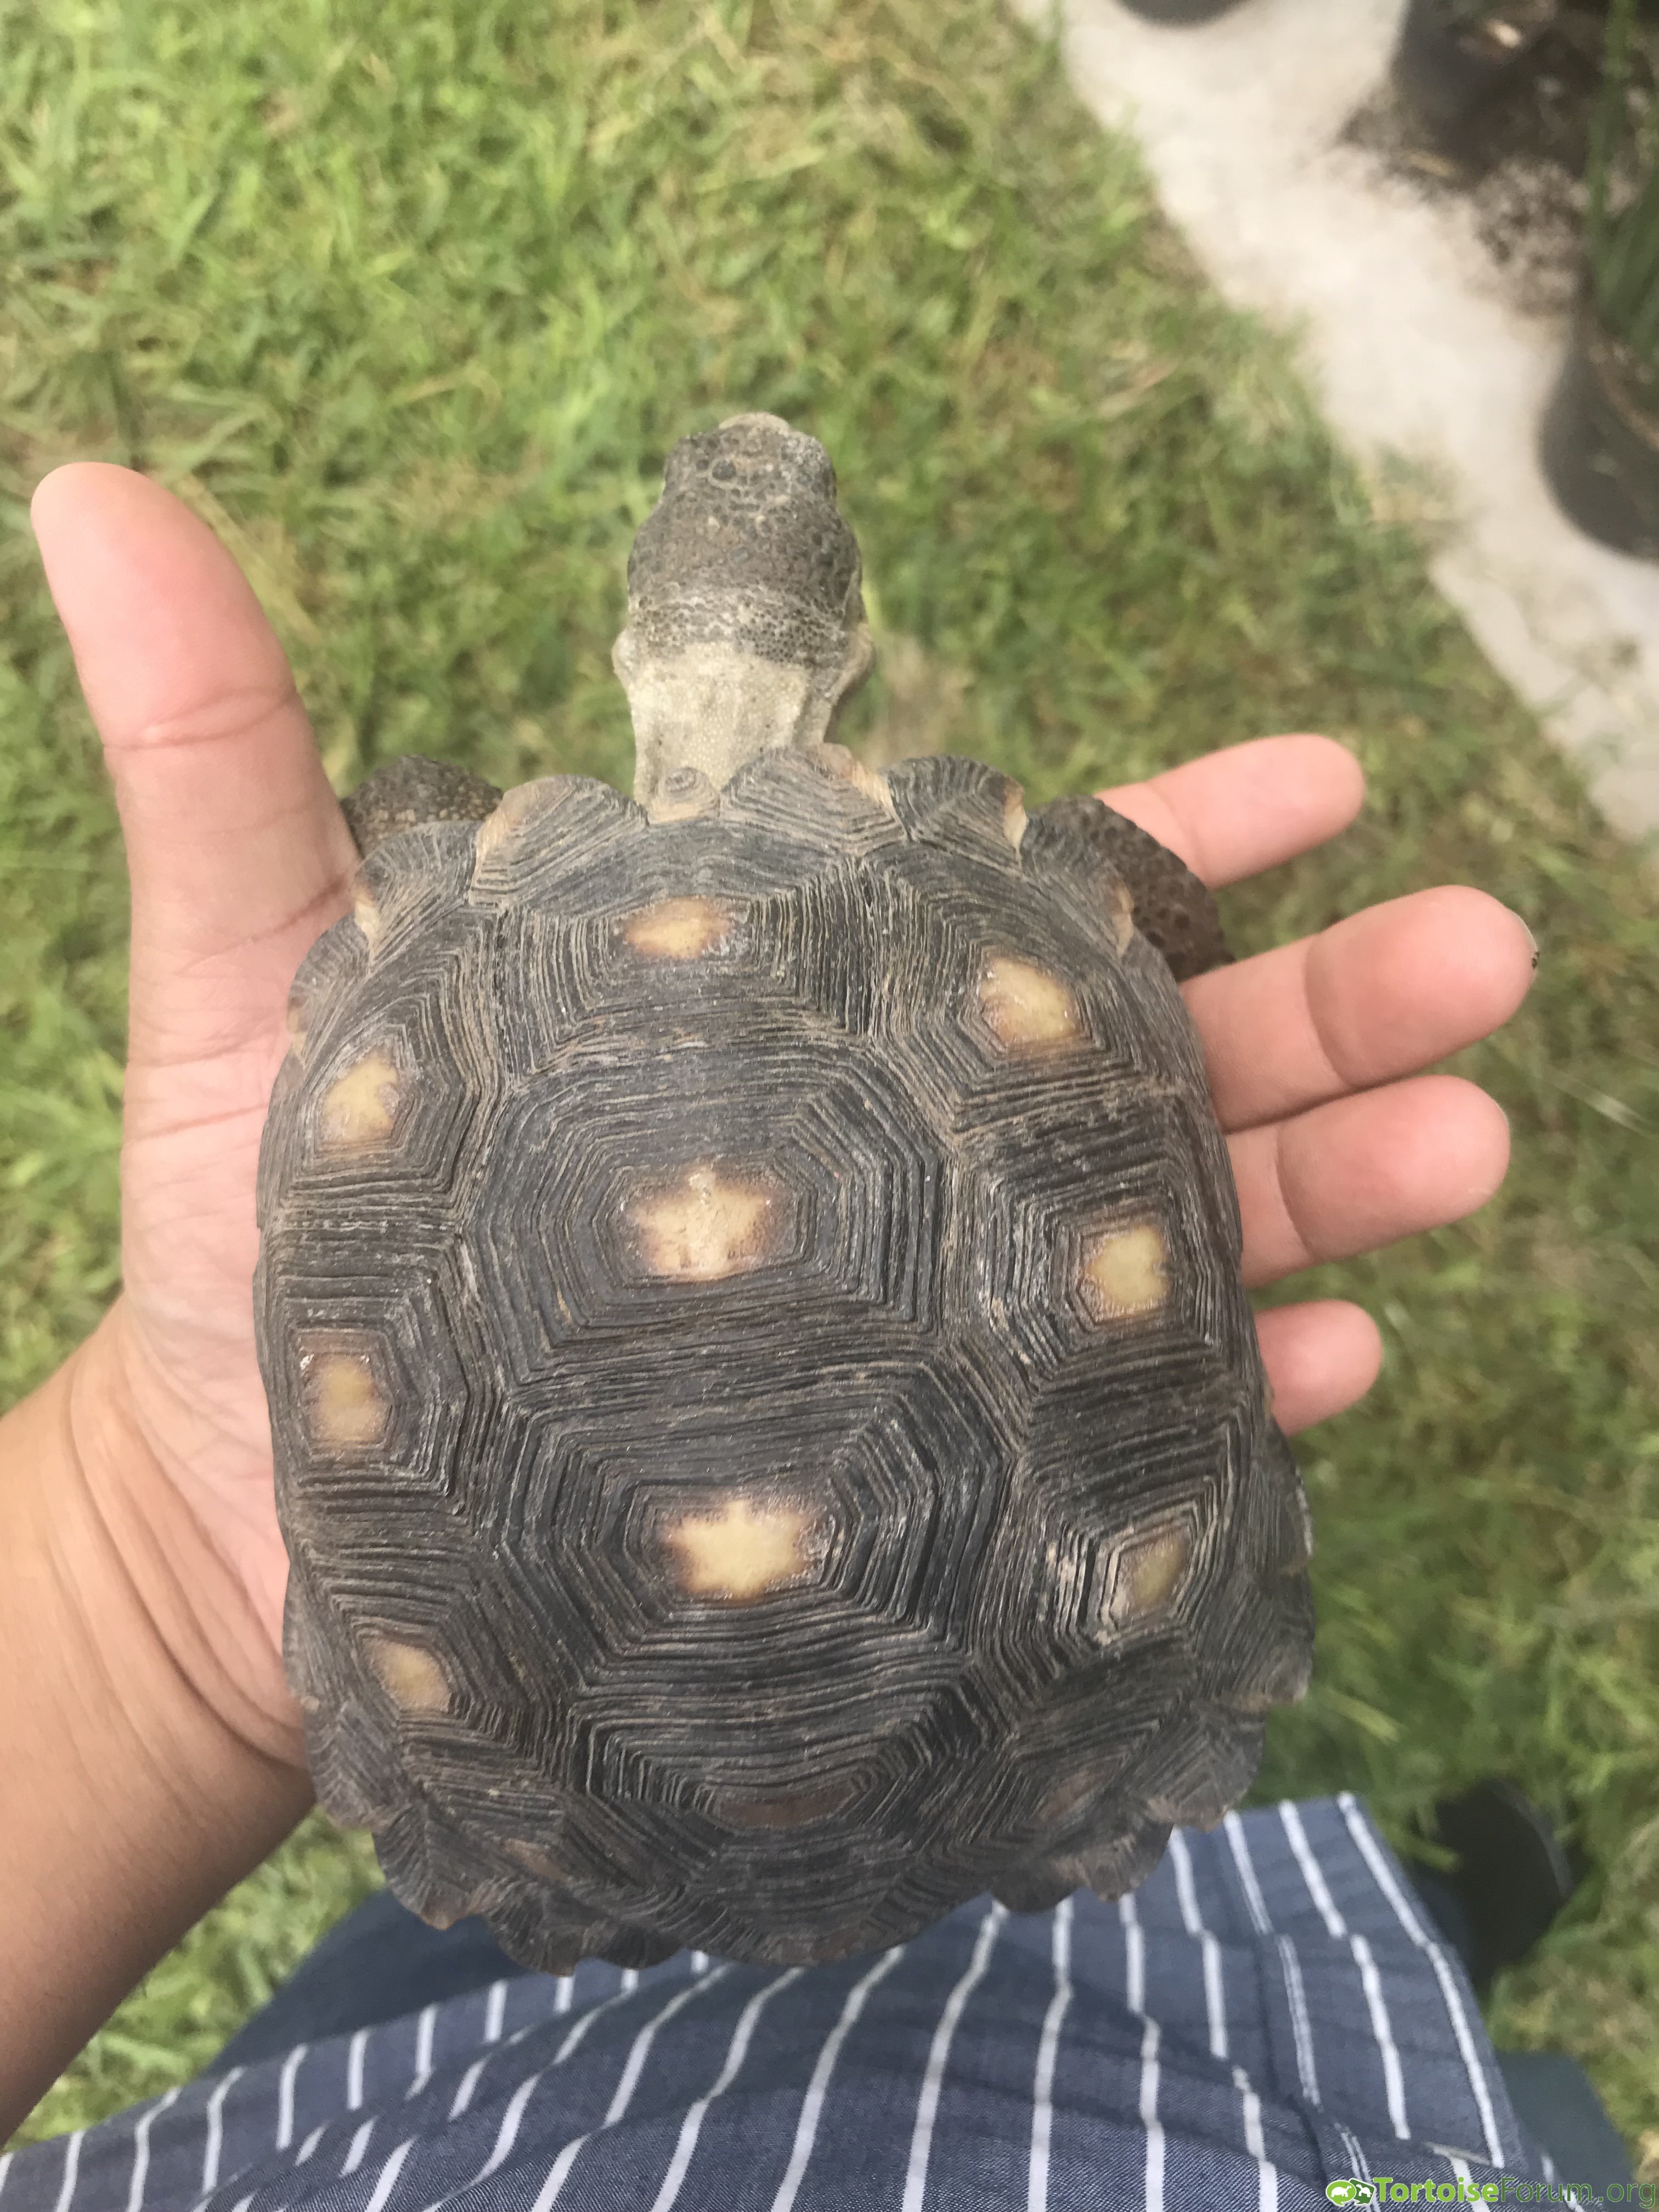 Texas tortoise?